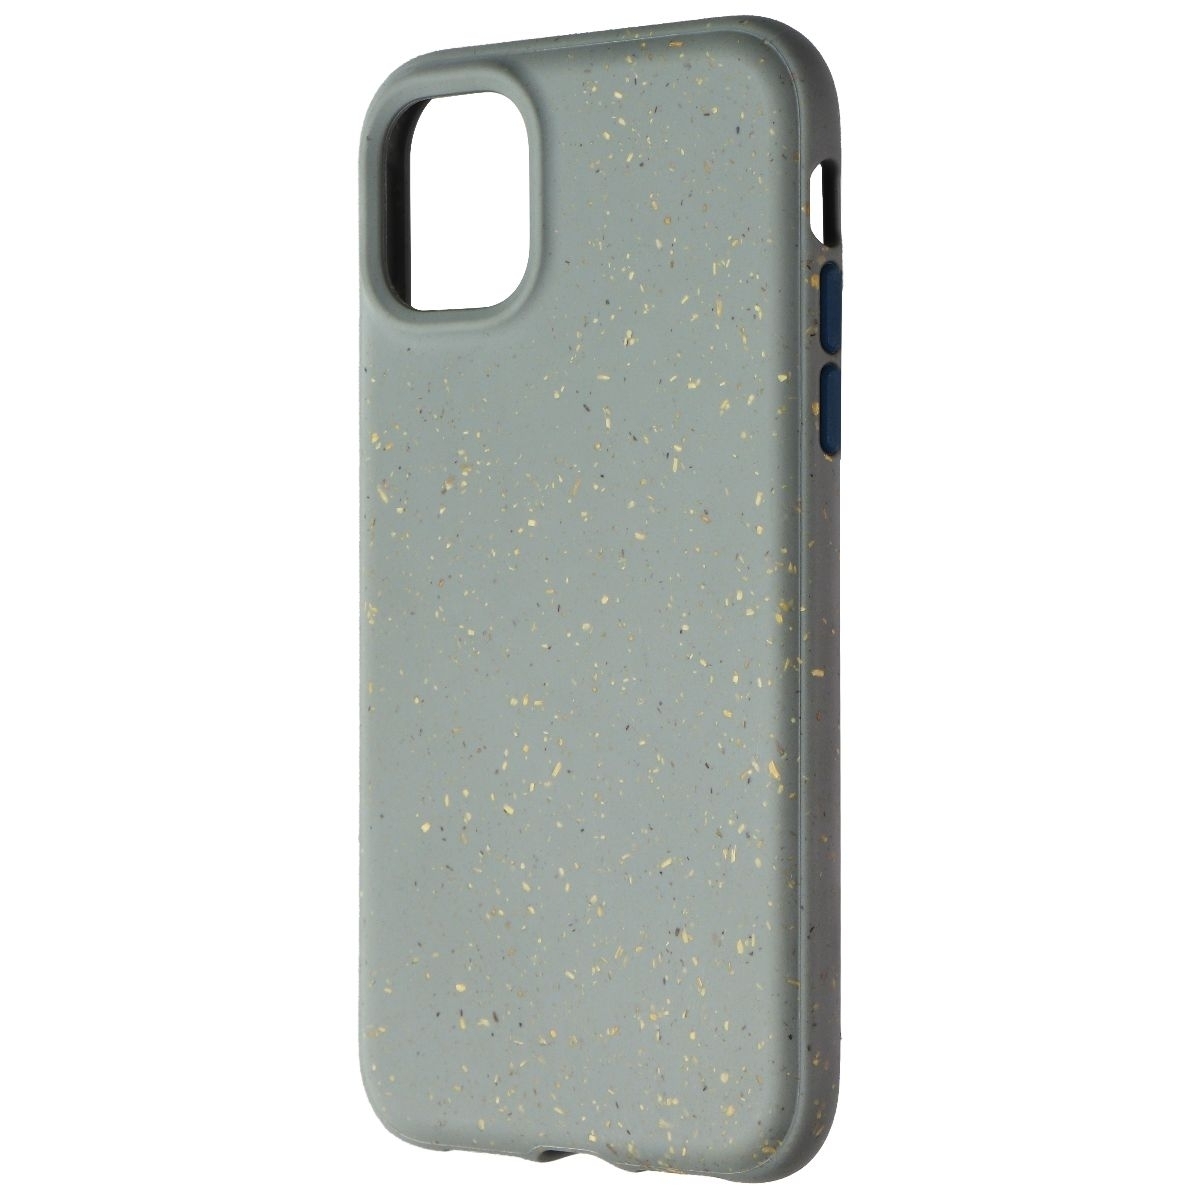 Tech21 EcoSlim Bio-Degradable Flexible Protection Case For IPhone 11 - Gray (Refurbished)